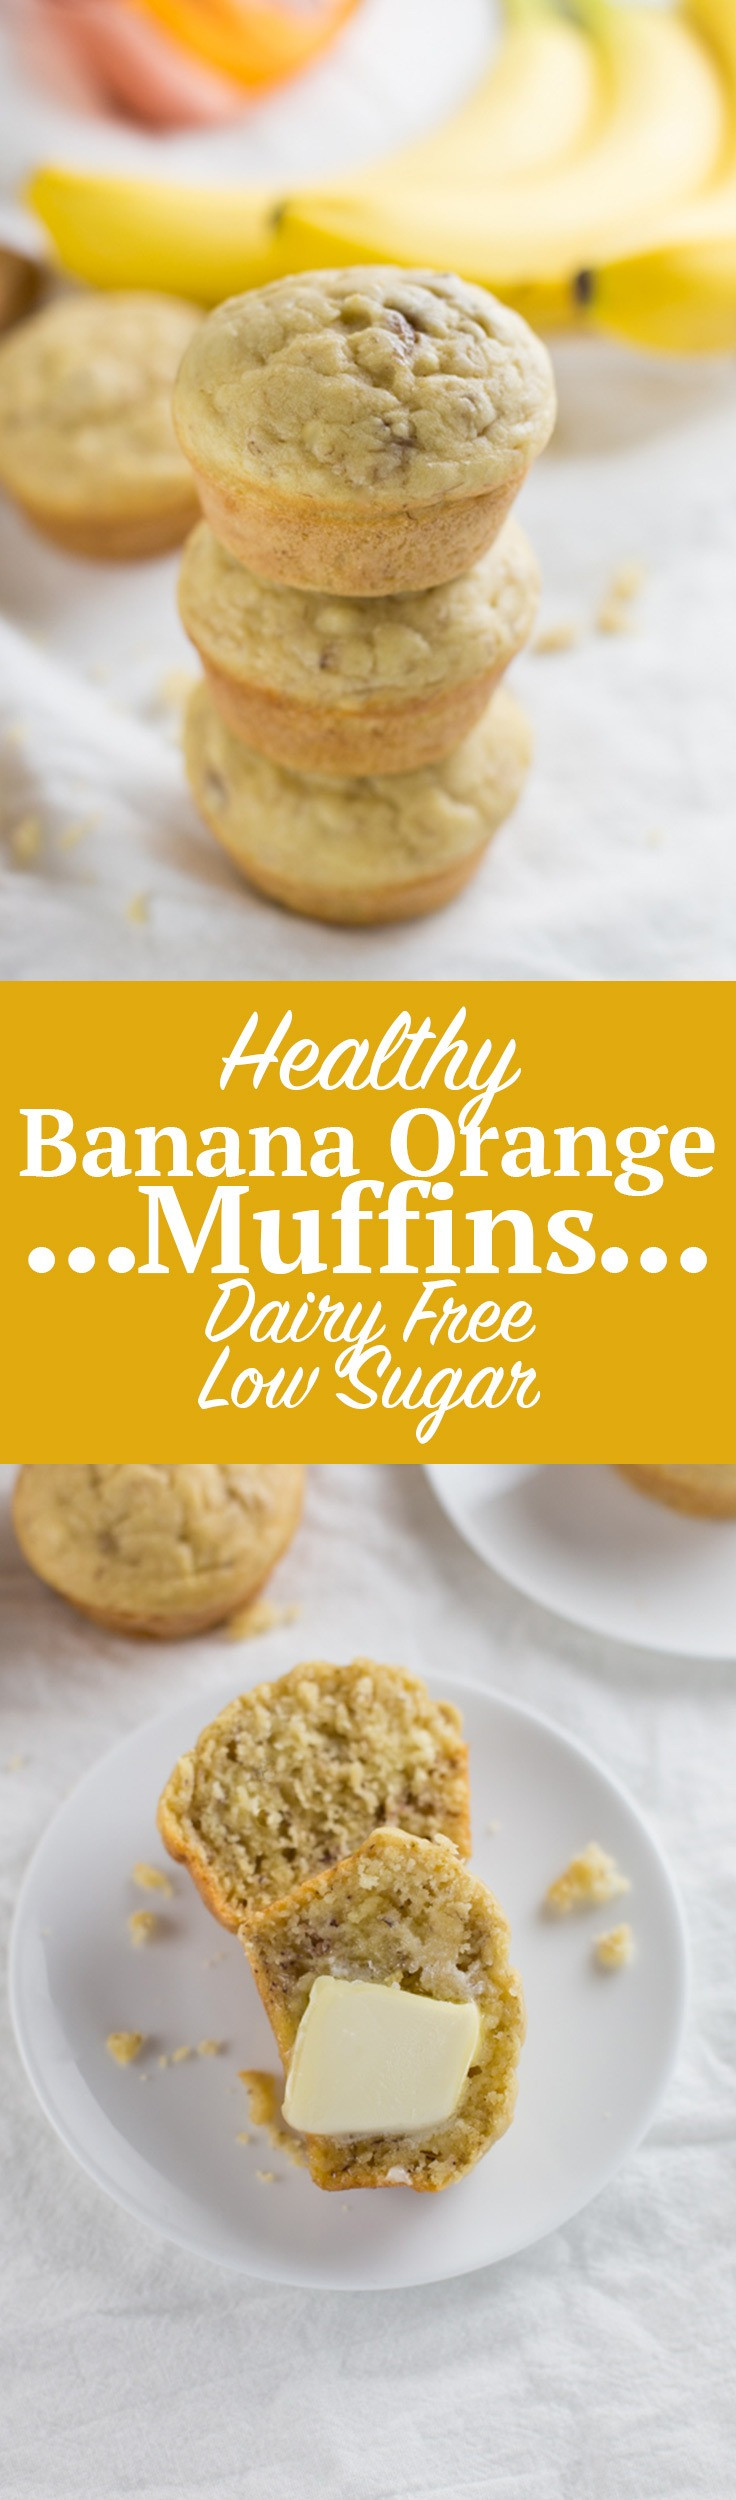 Healthy Low Sugar Breakfast
 Healthy Banana Orange Muffins Dairy Free Low Sugar